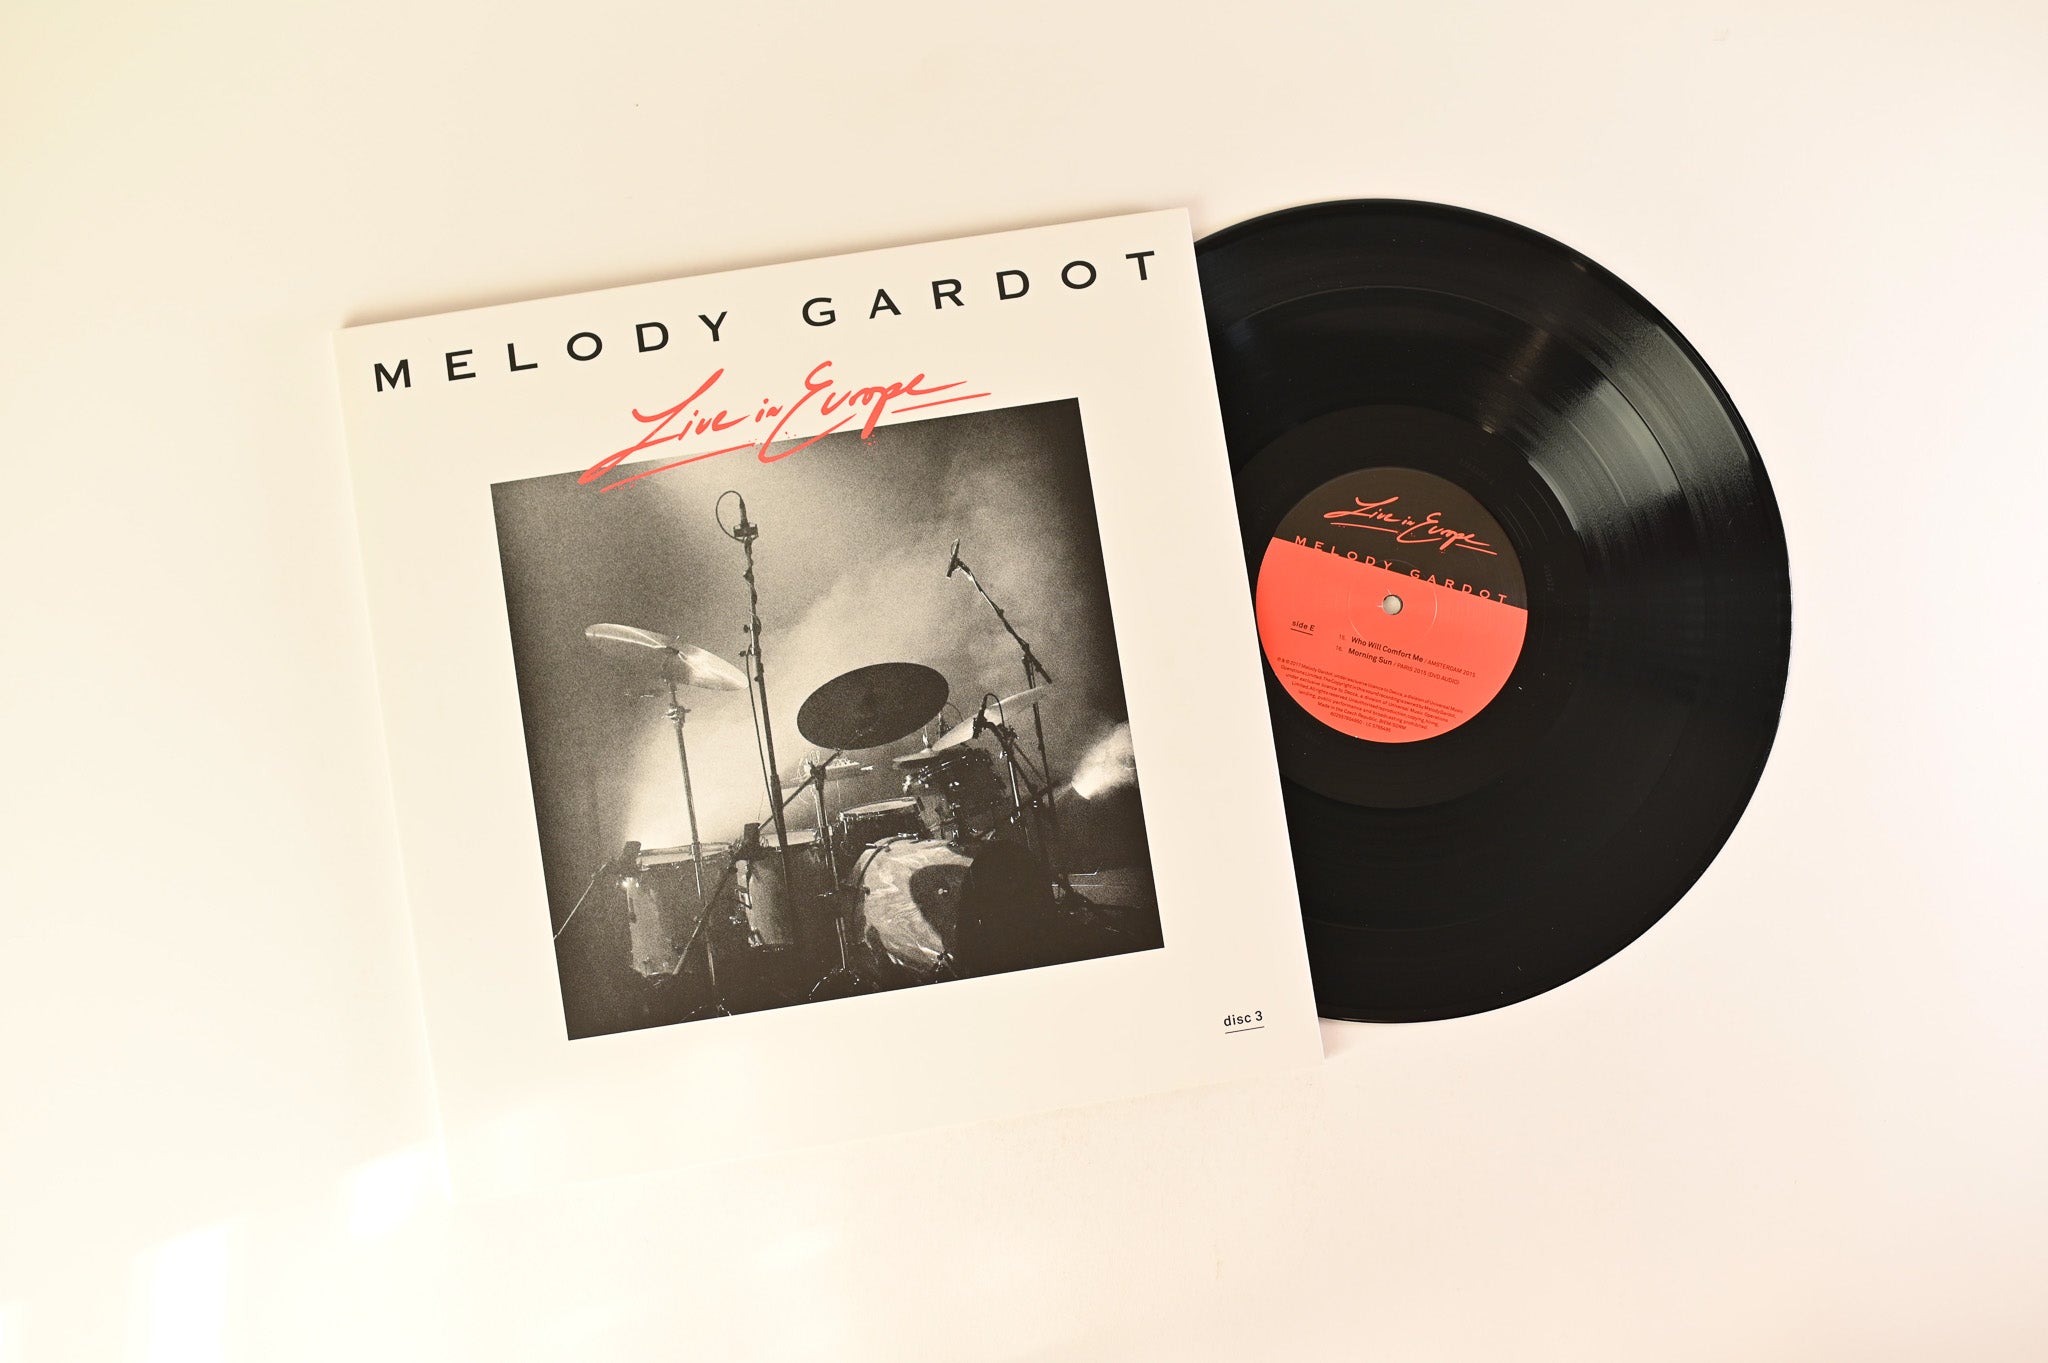 Melody Gardot - Live In Europe on Decca Ltd Box Set